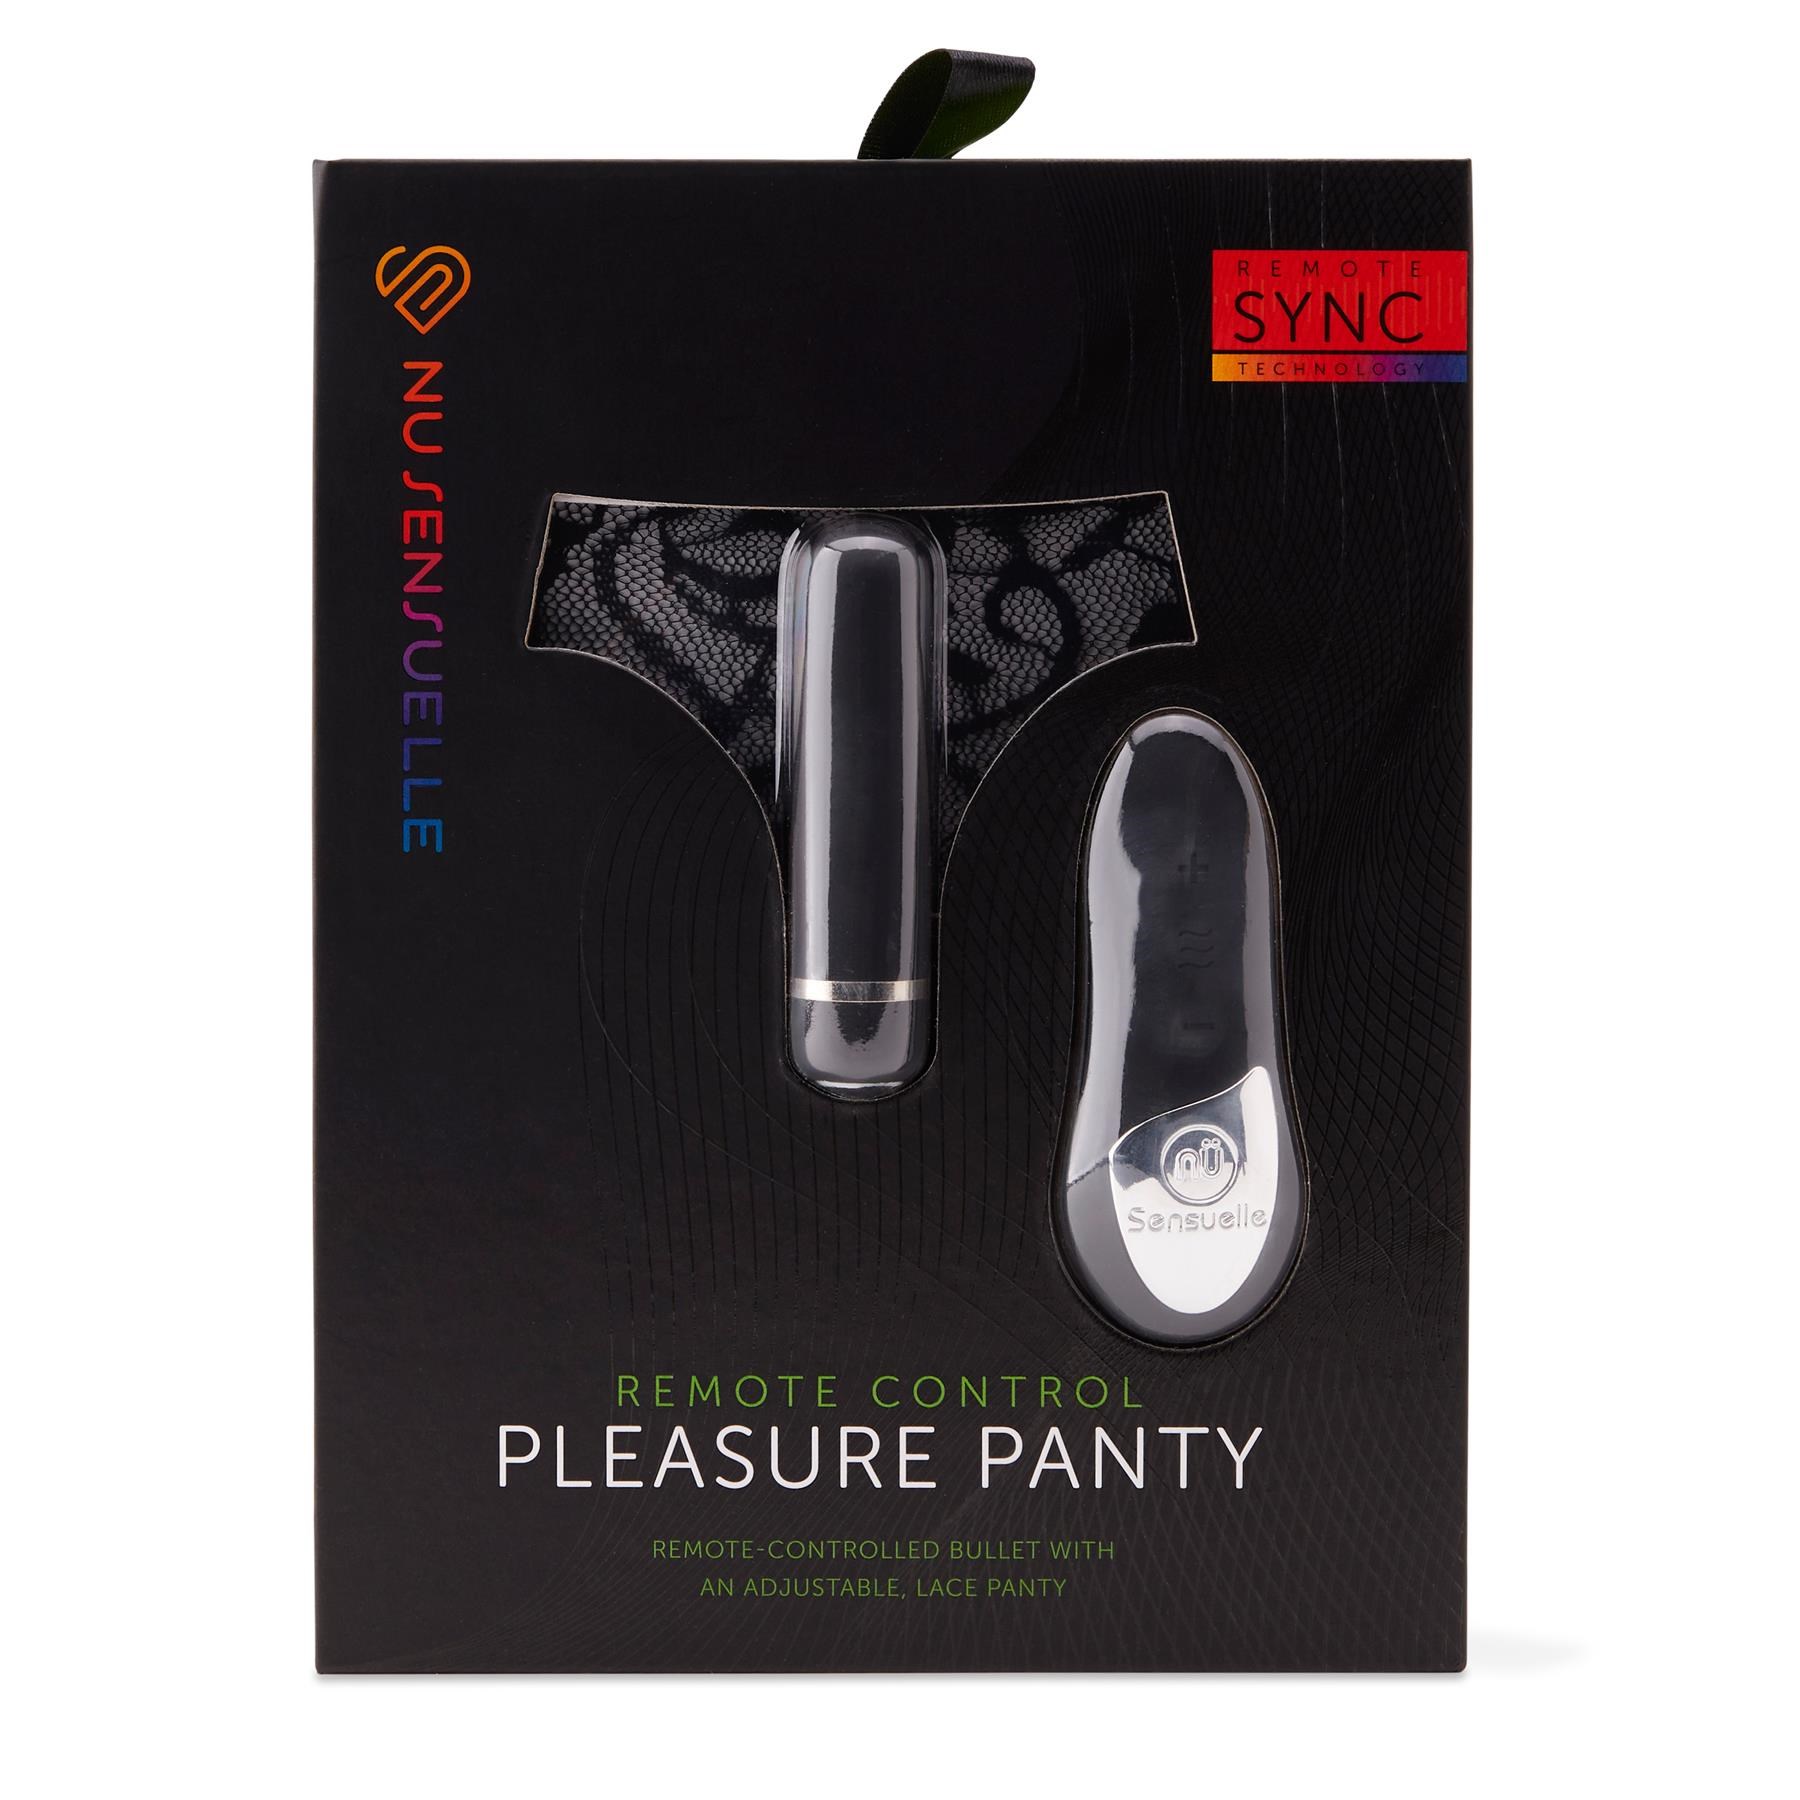 Nu Sensuelle Pleasure Panty With Remote Control - Packaging Shot - Black